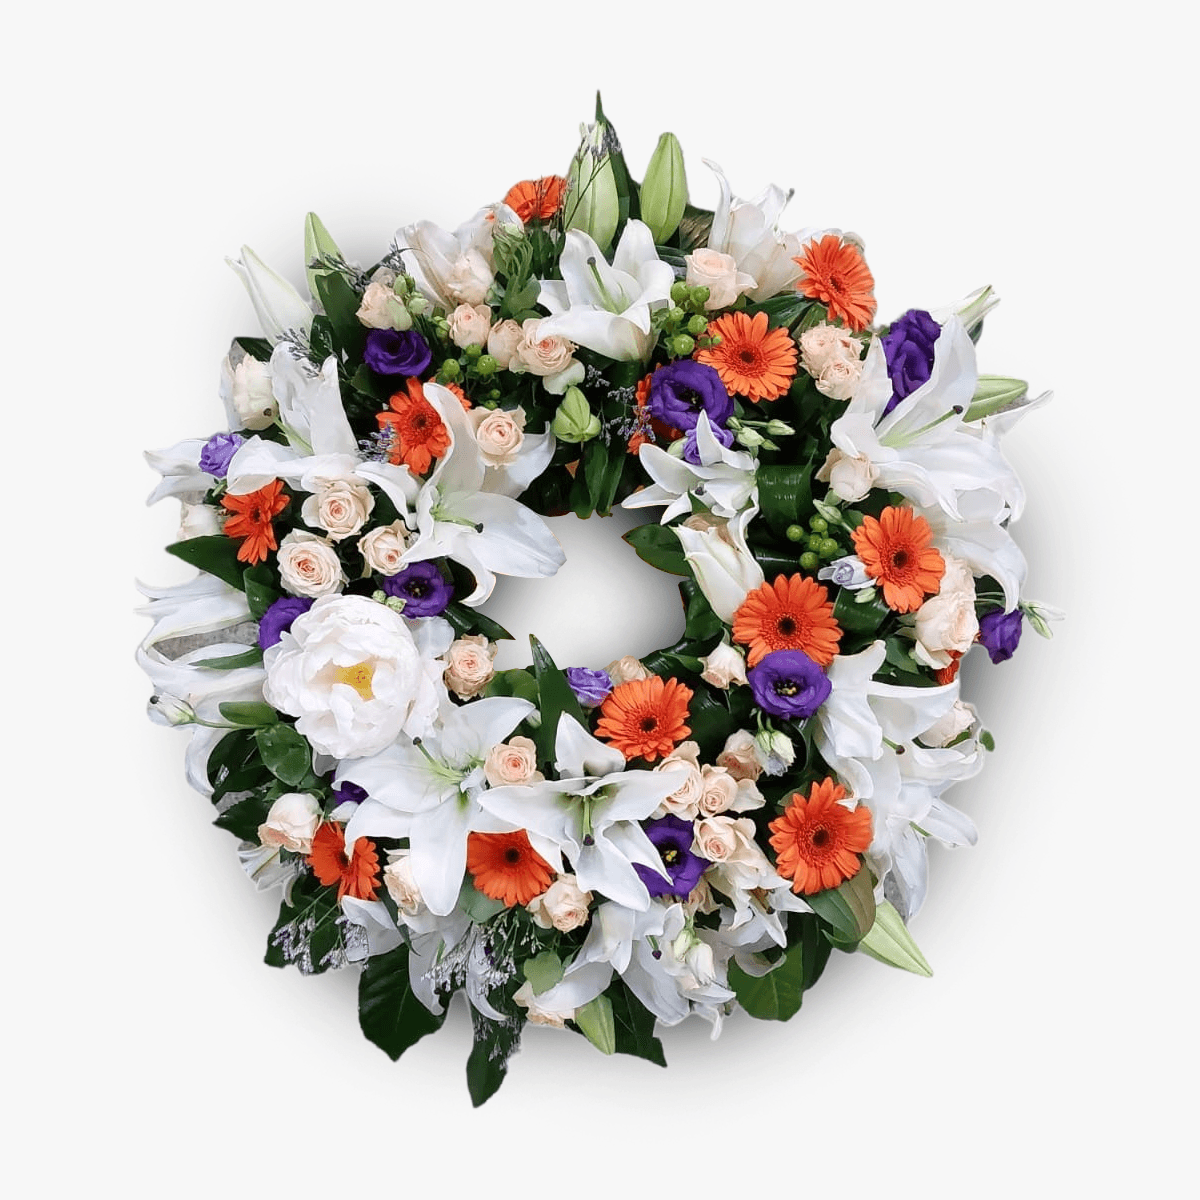 Coroana funerara cu flori colorate cu 11 minigerbera portocalii, 7 crini albi, 5 spray alb, 5 lisianthus mov